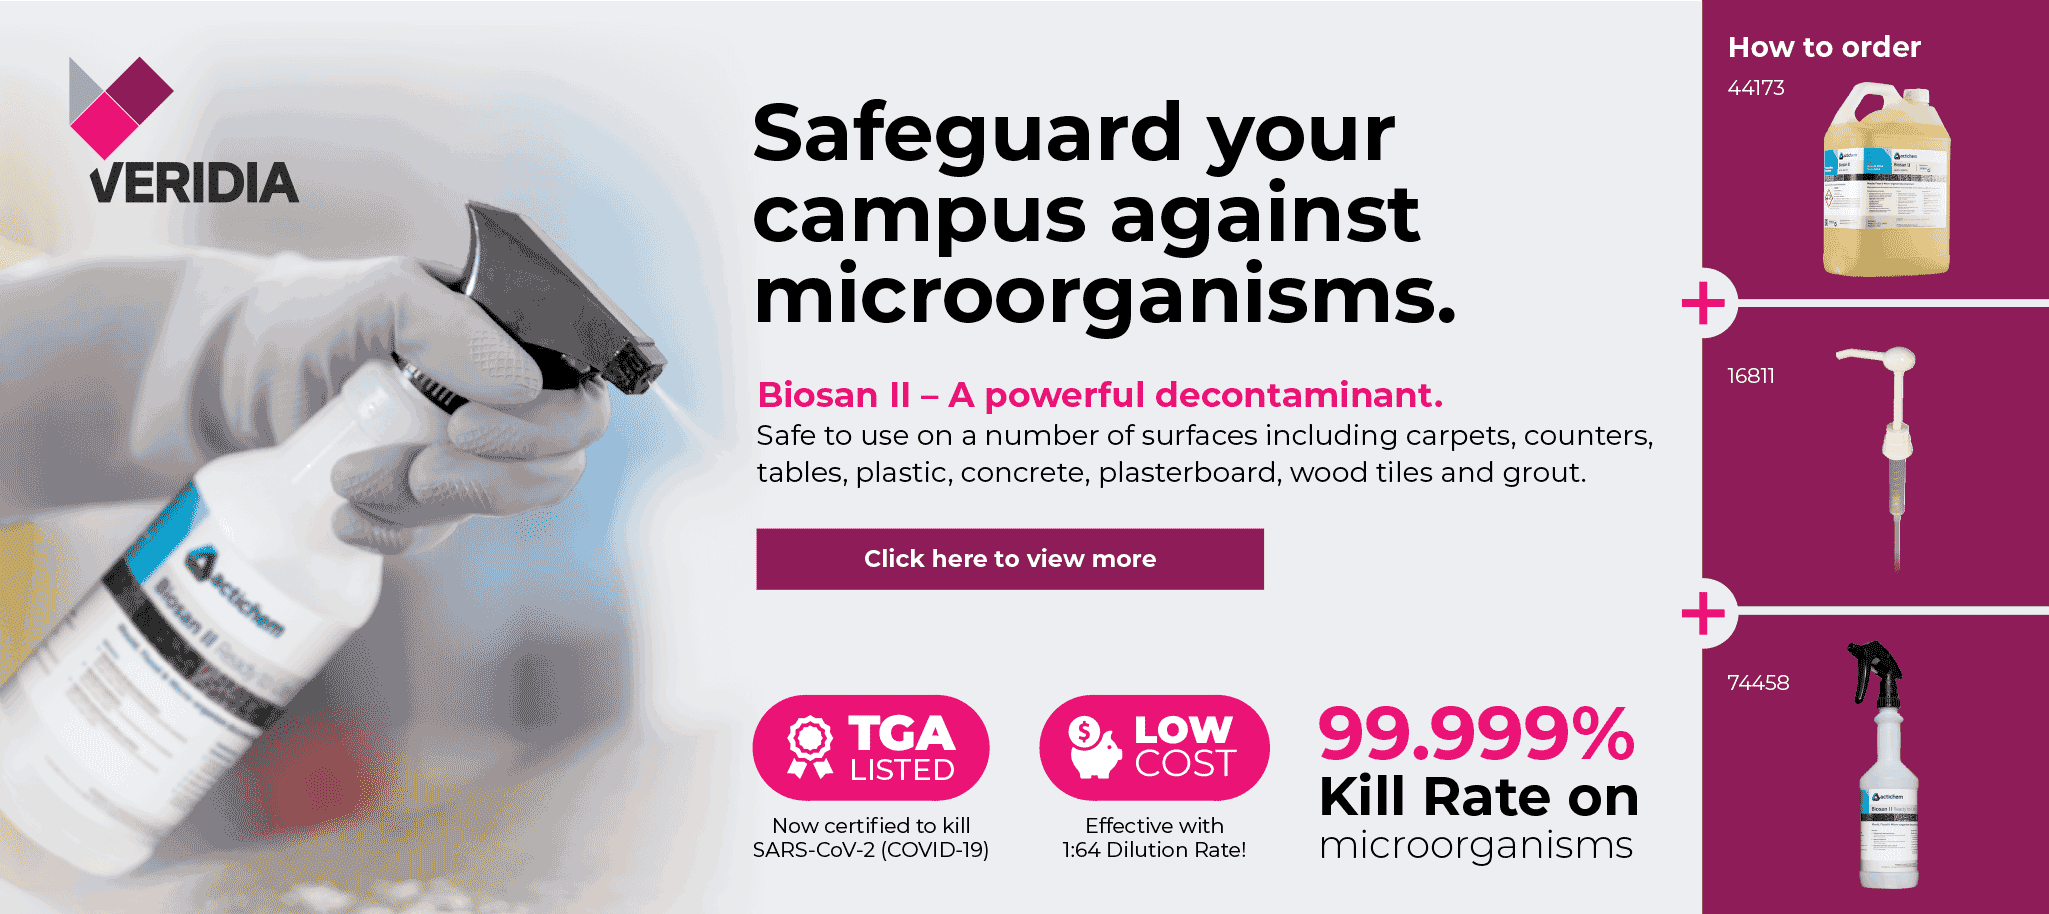 Safeguard your campus against microorganisms - Biosan II